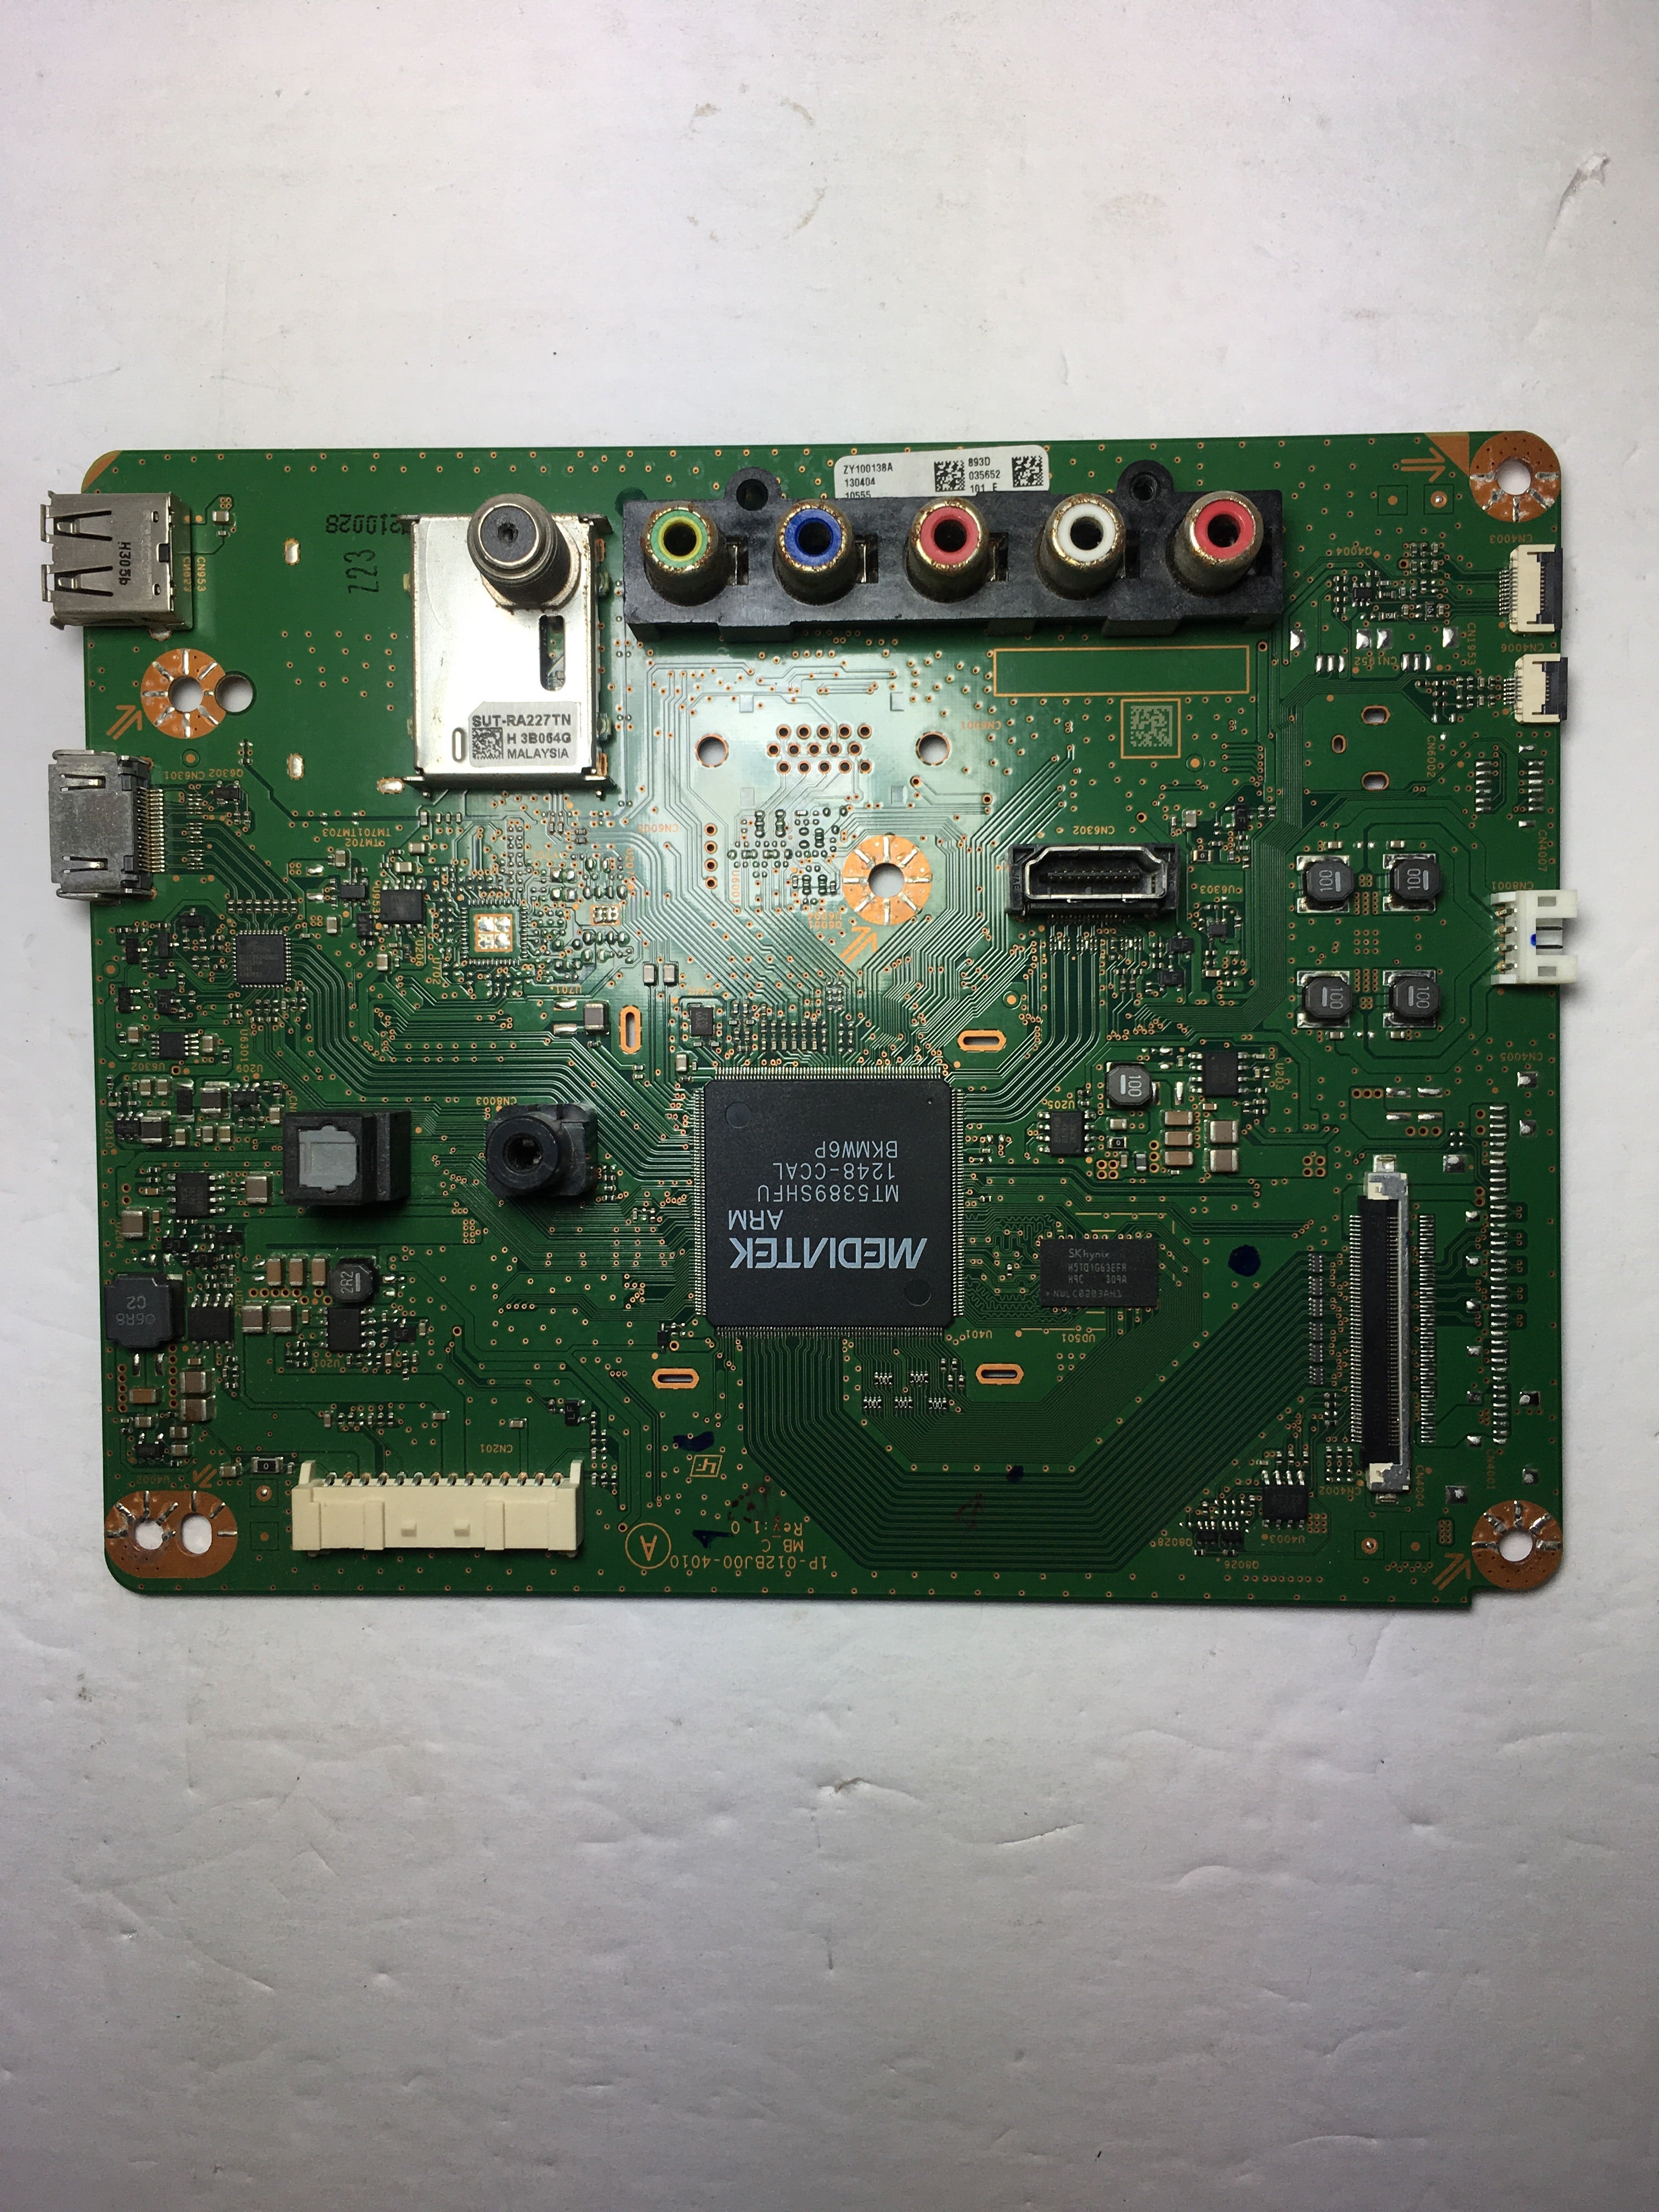 Sony 1-895-371-11 Main Board for KDL-40R450A KDL-46R450A KDL-46R453A